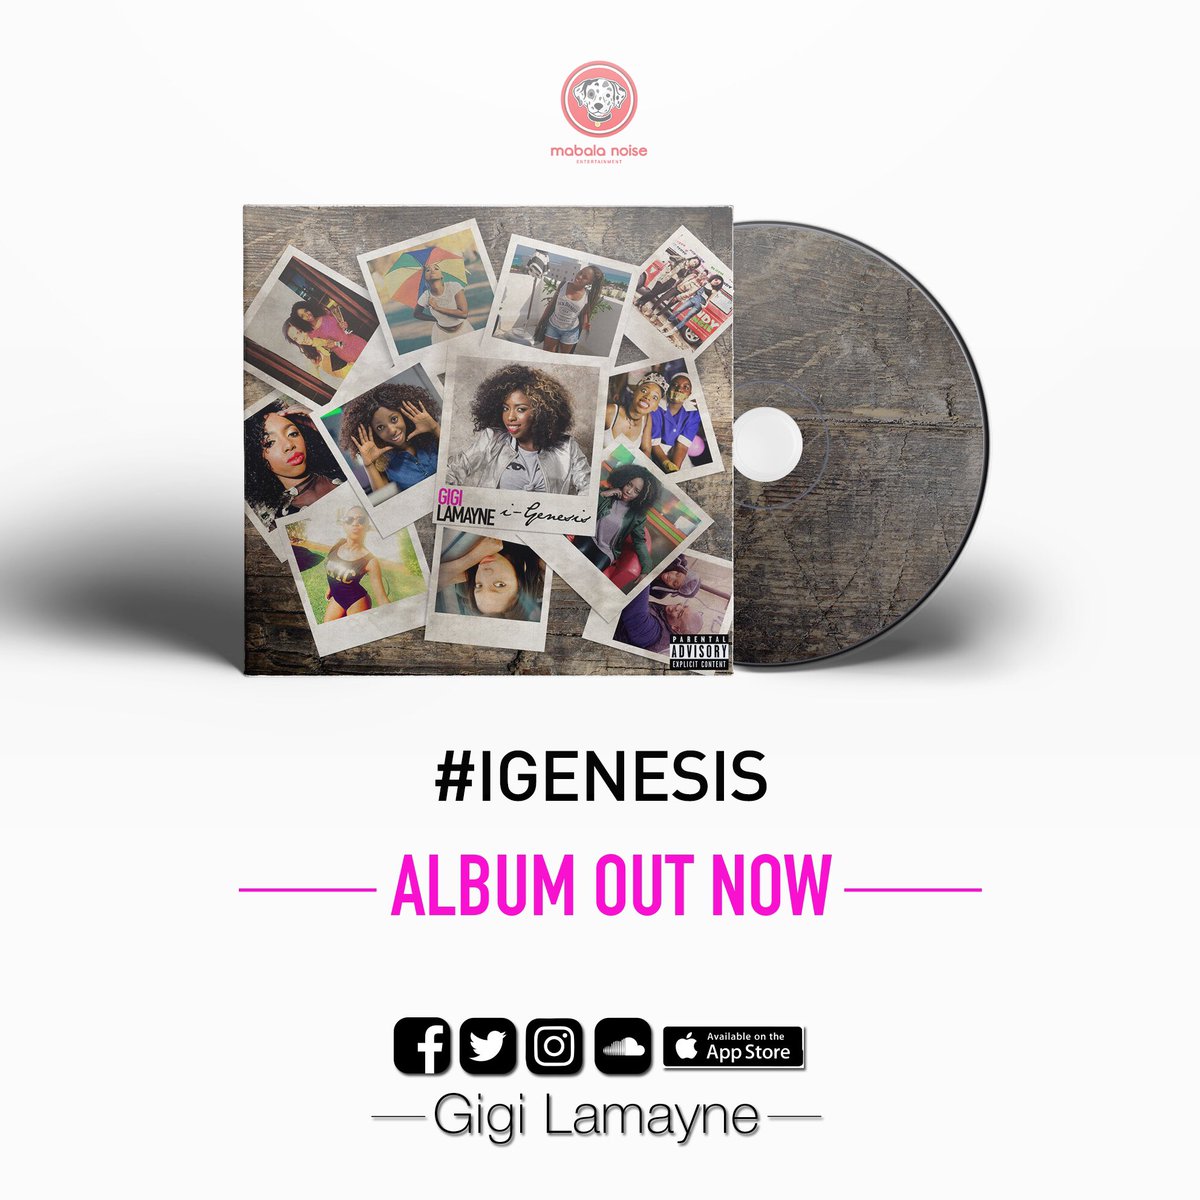 Stream & Download Gigi Lamayne's iGenesis Album